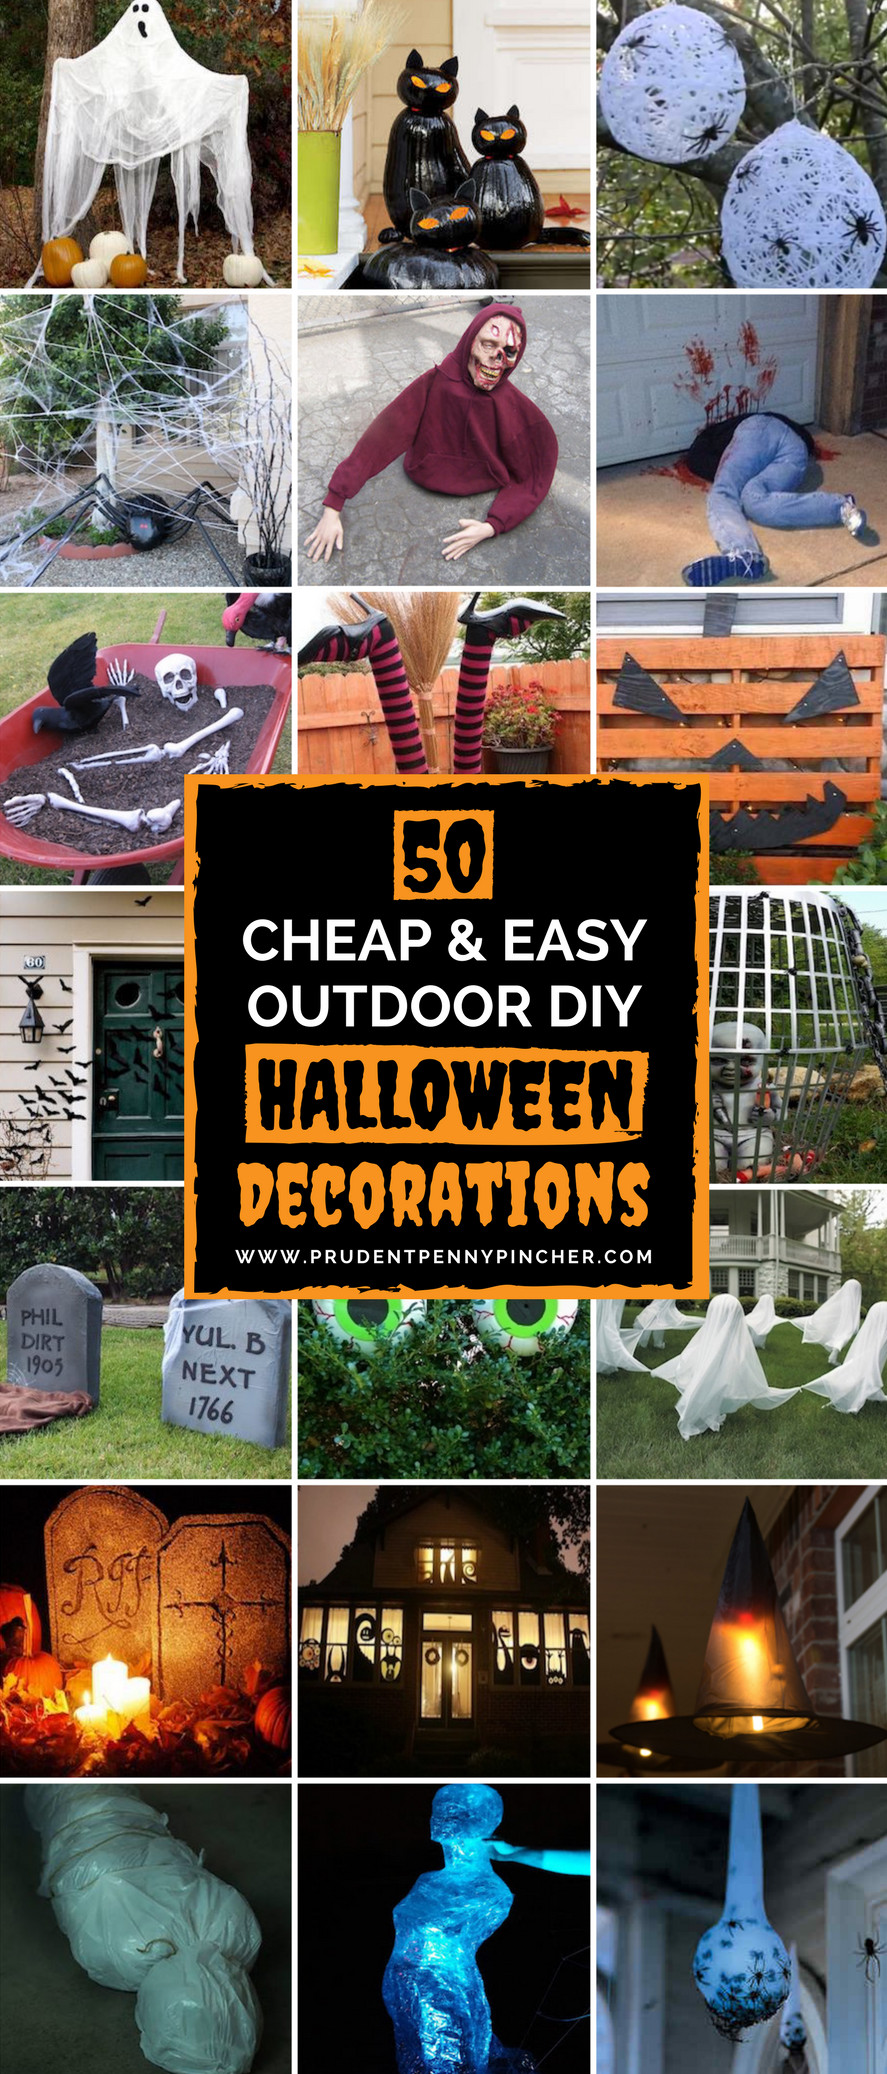 Easy DIY Halloween Decorations Outdoor
 50 Cheap and Easy Outdoor Halloween Decor DIY Ideas